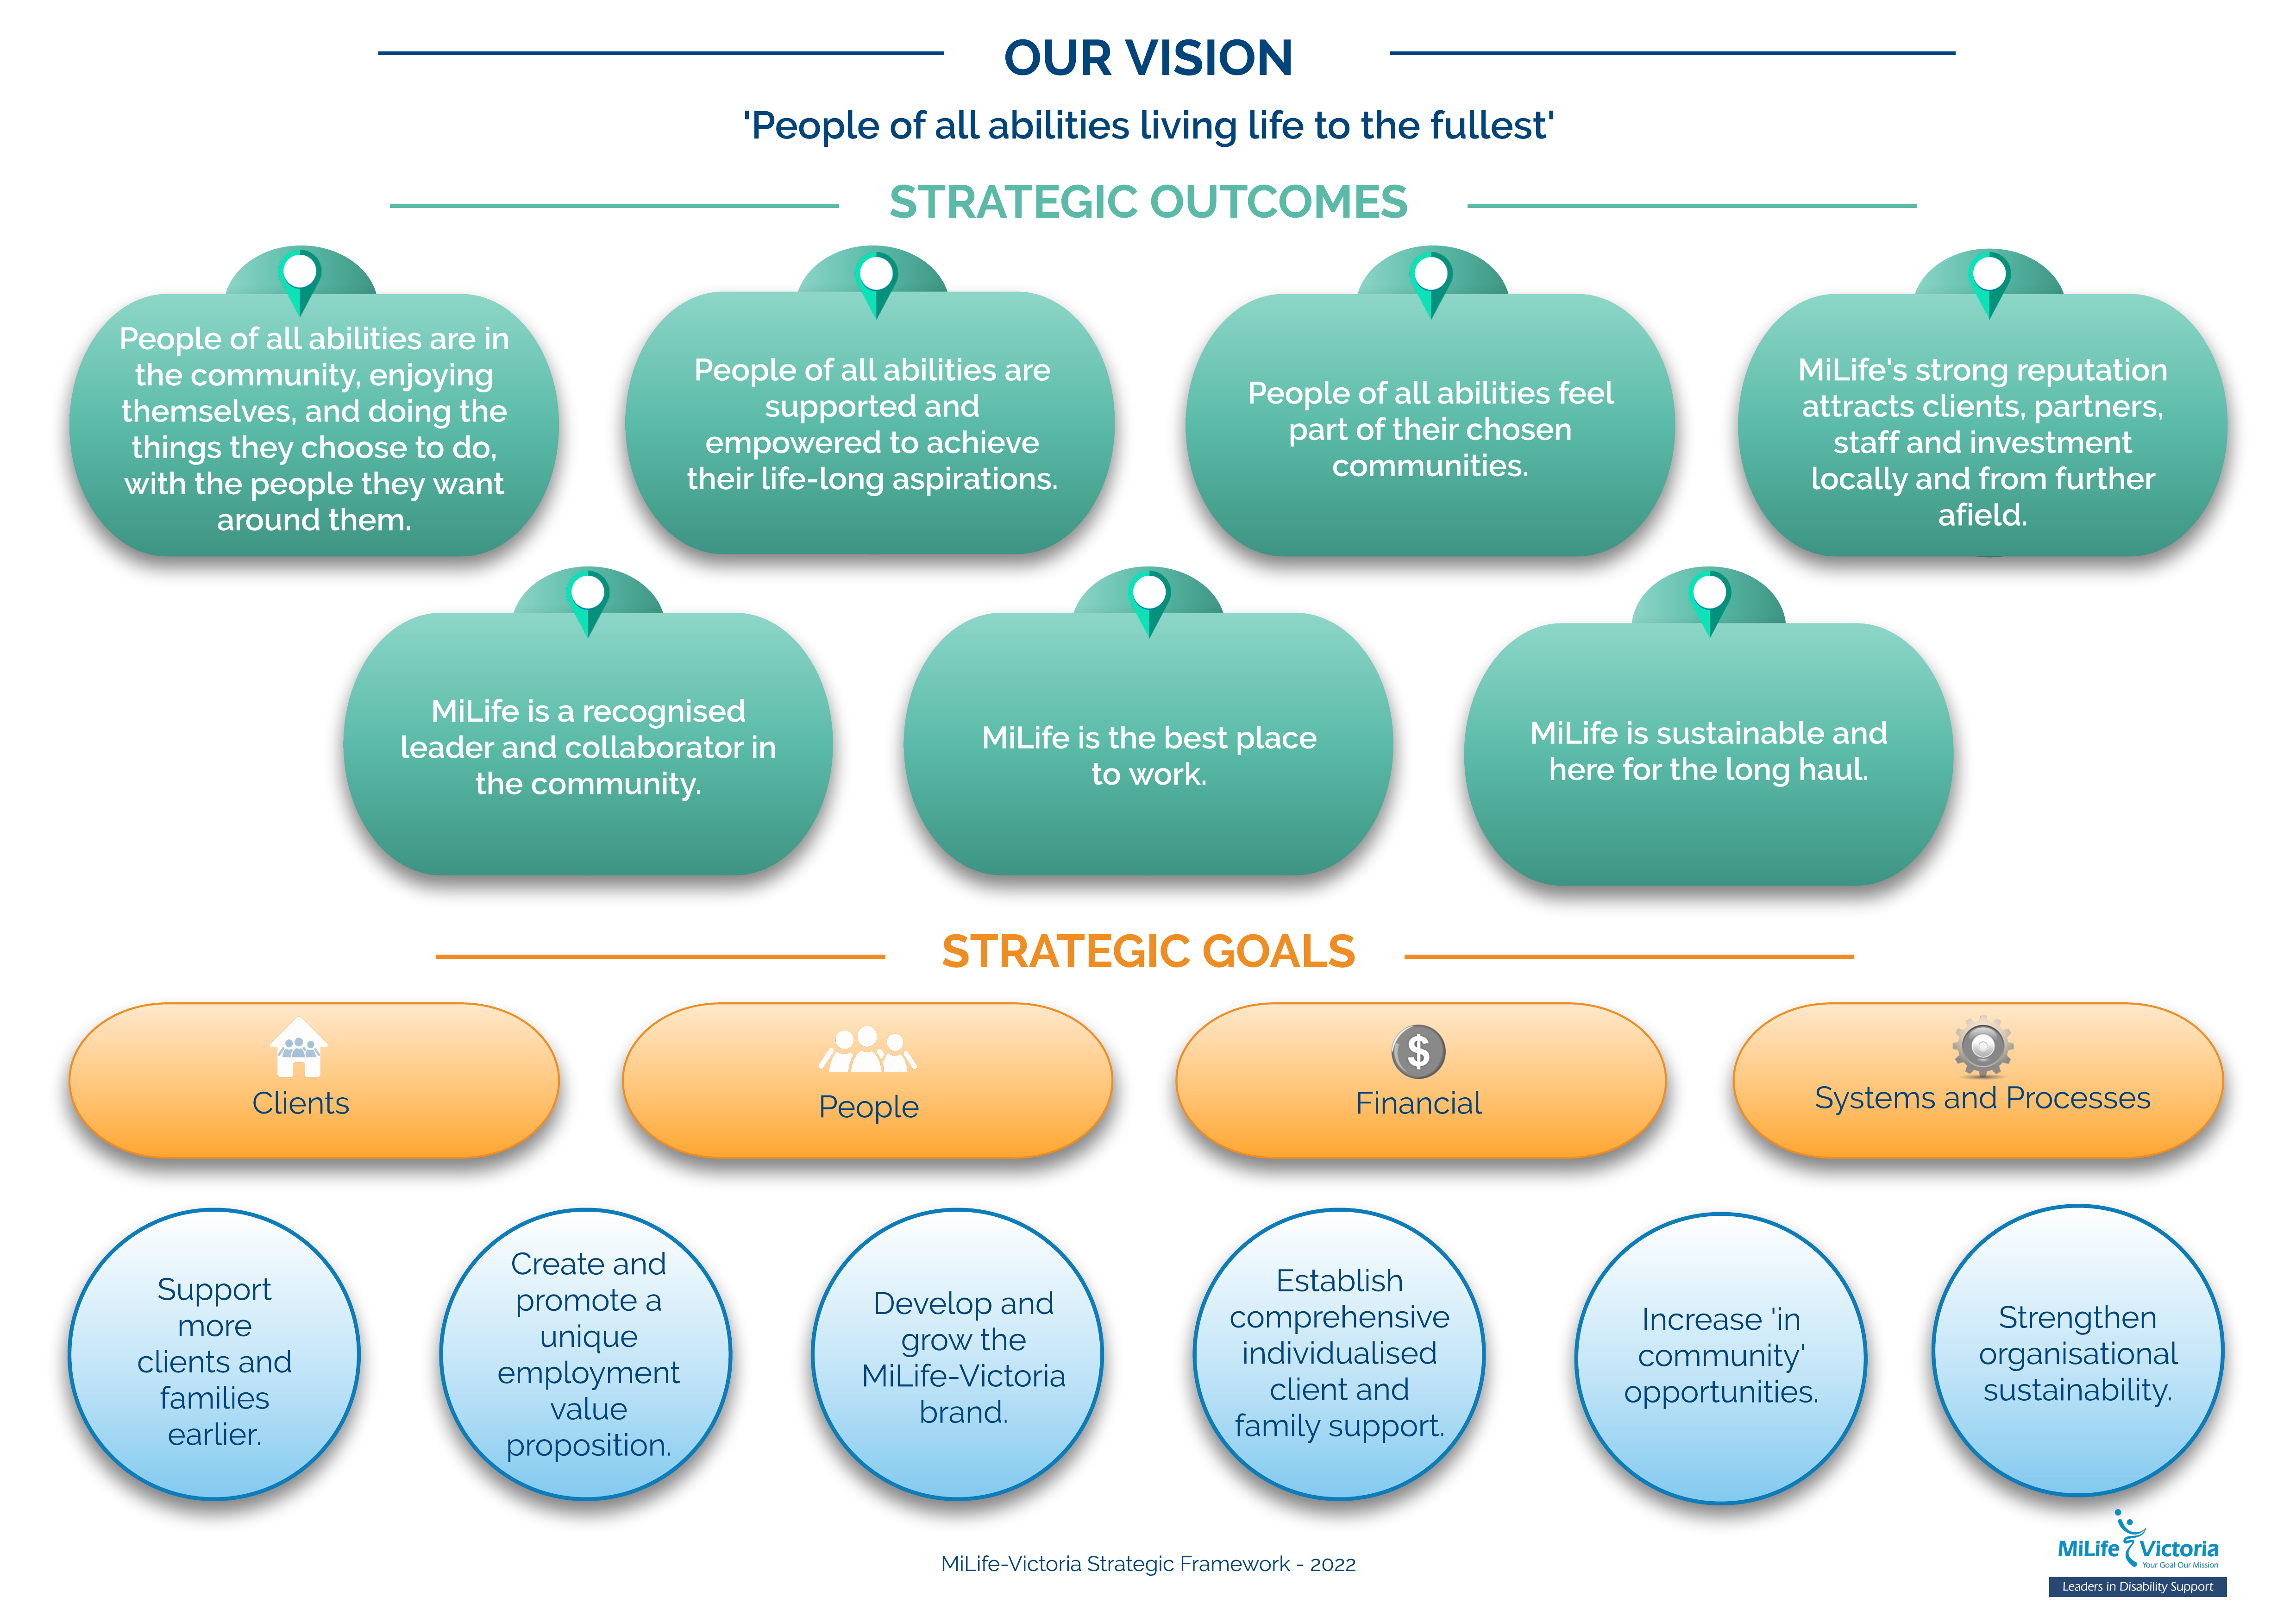 MiLife-Victoria's Strategic Framework